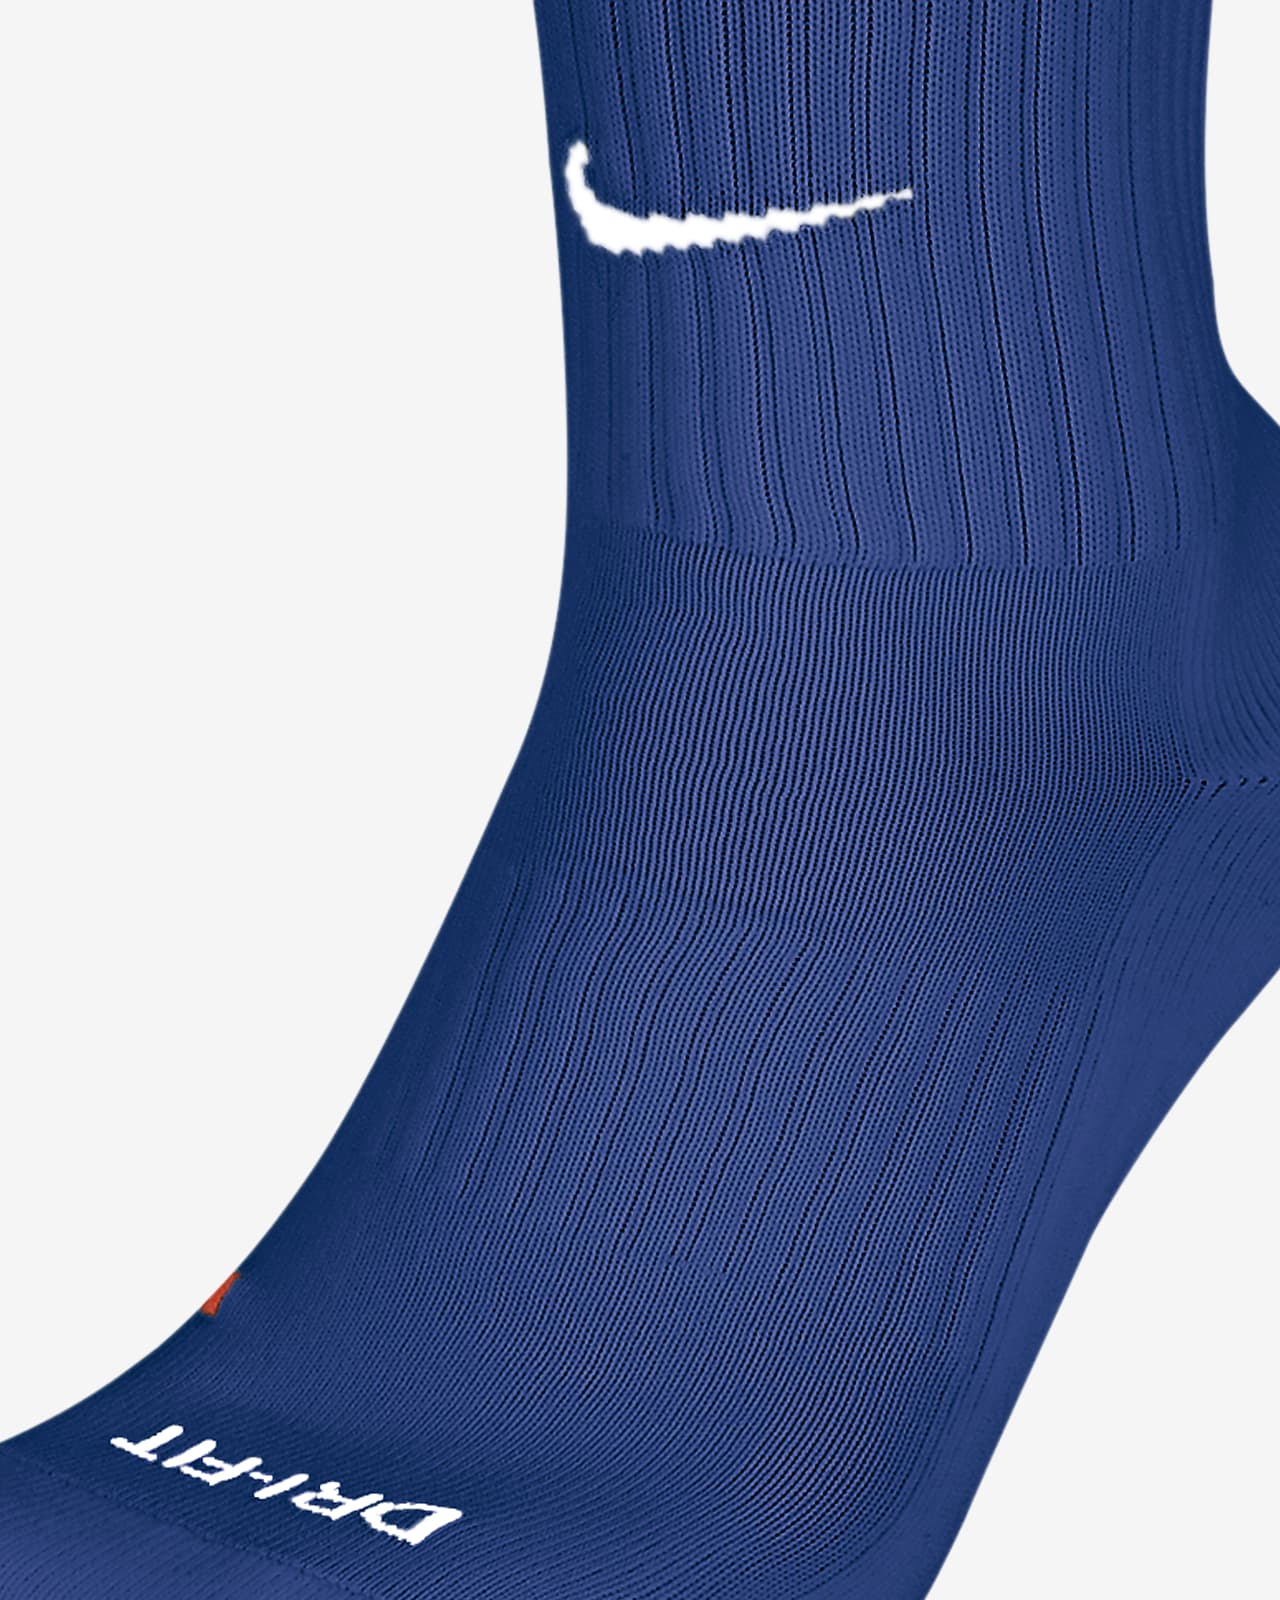 Nike Academy Over-The-Calf Football Socks